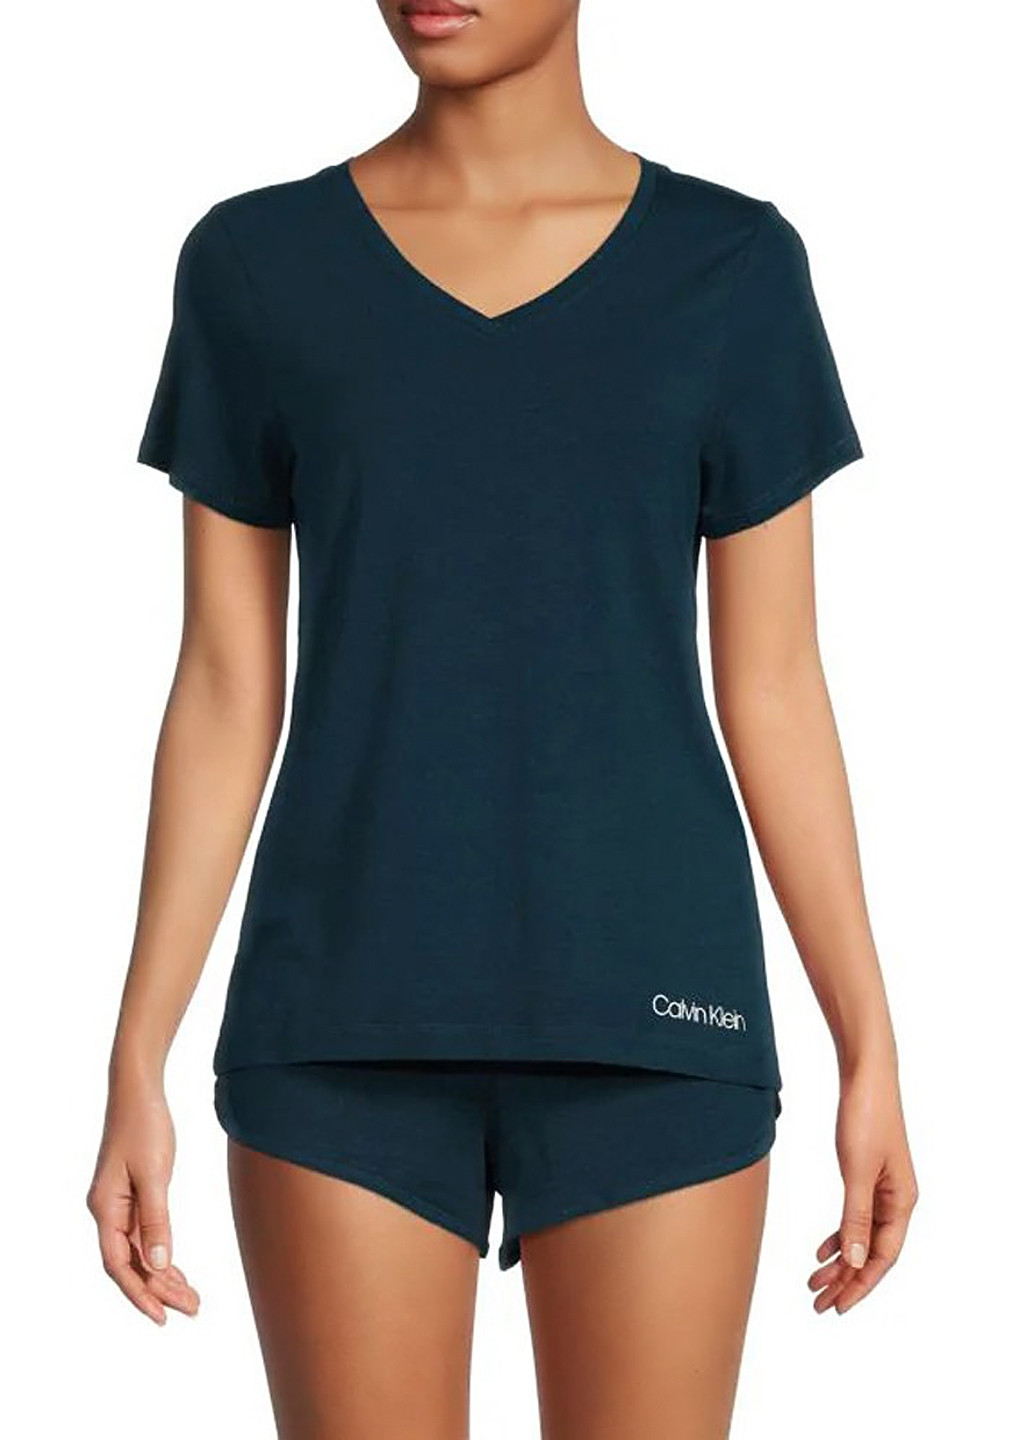 Темно-зелена всесезон піжама (футболка, шорти) футболка + шорти Calvin Klein